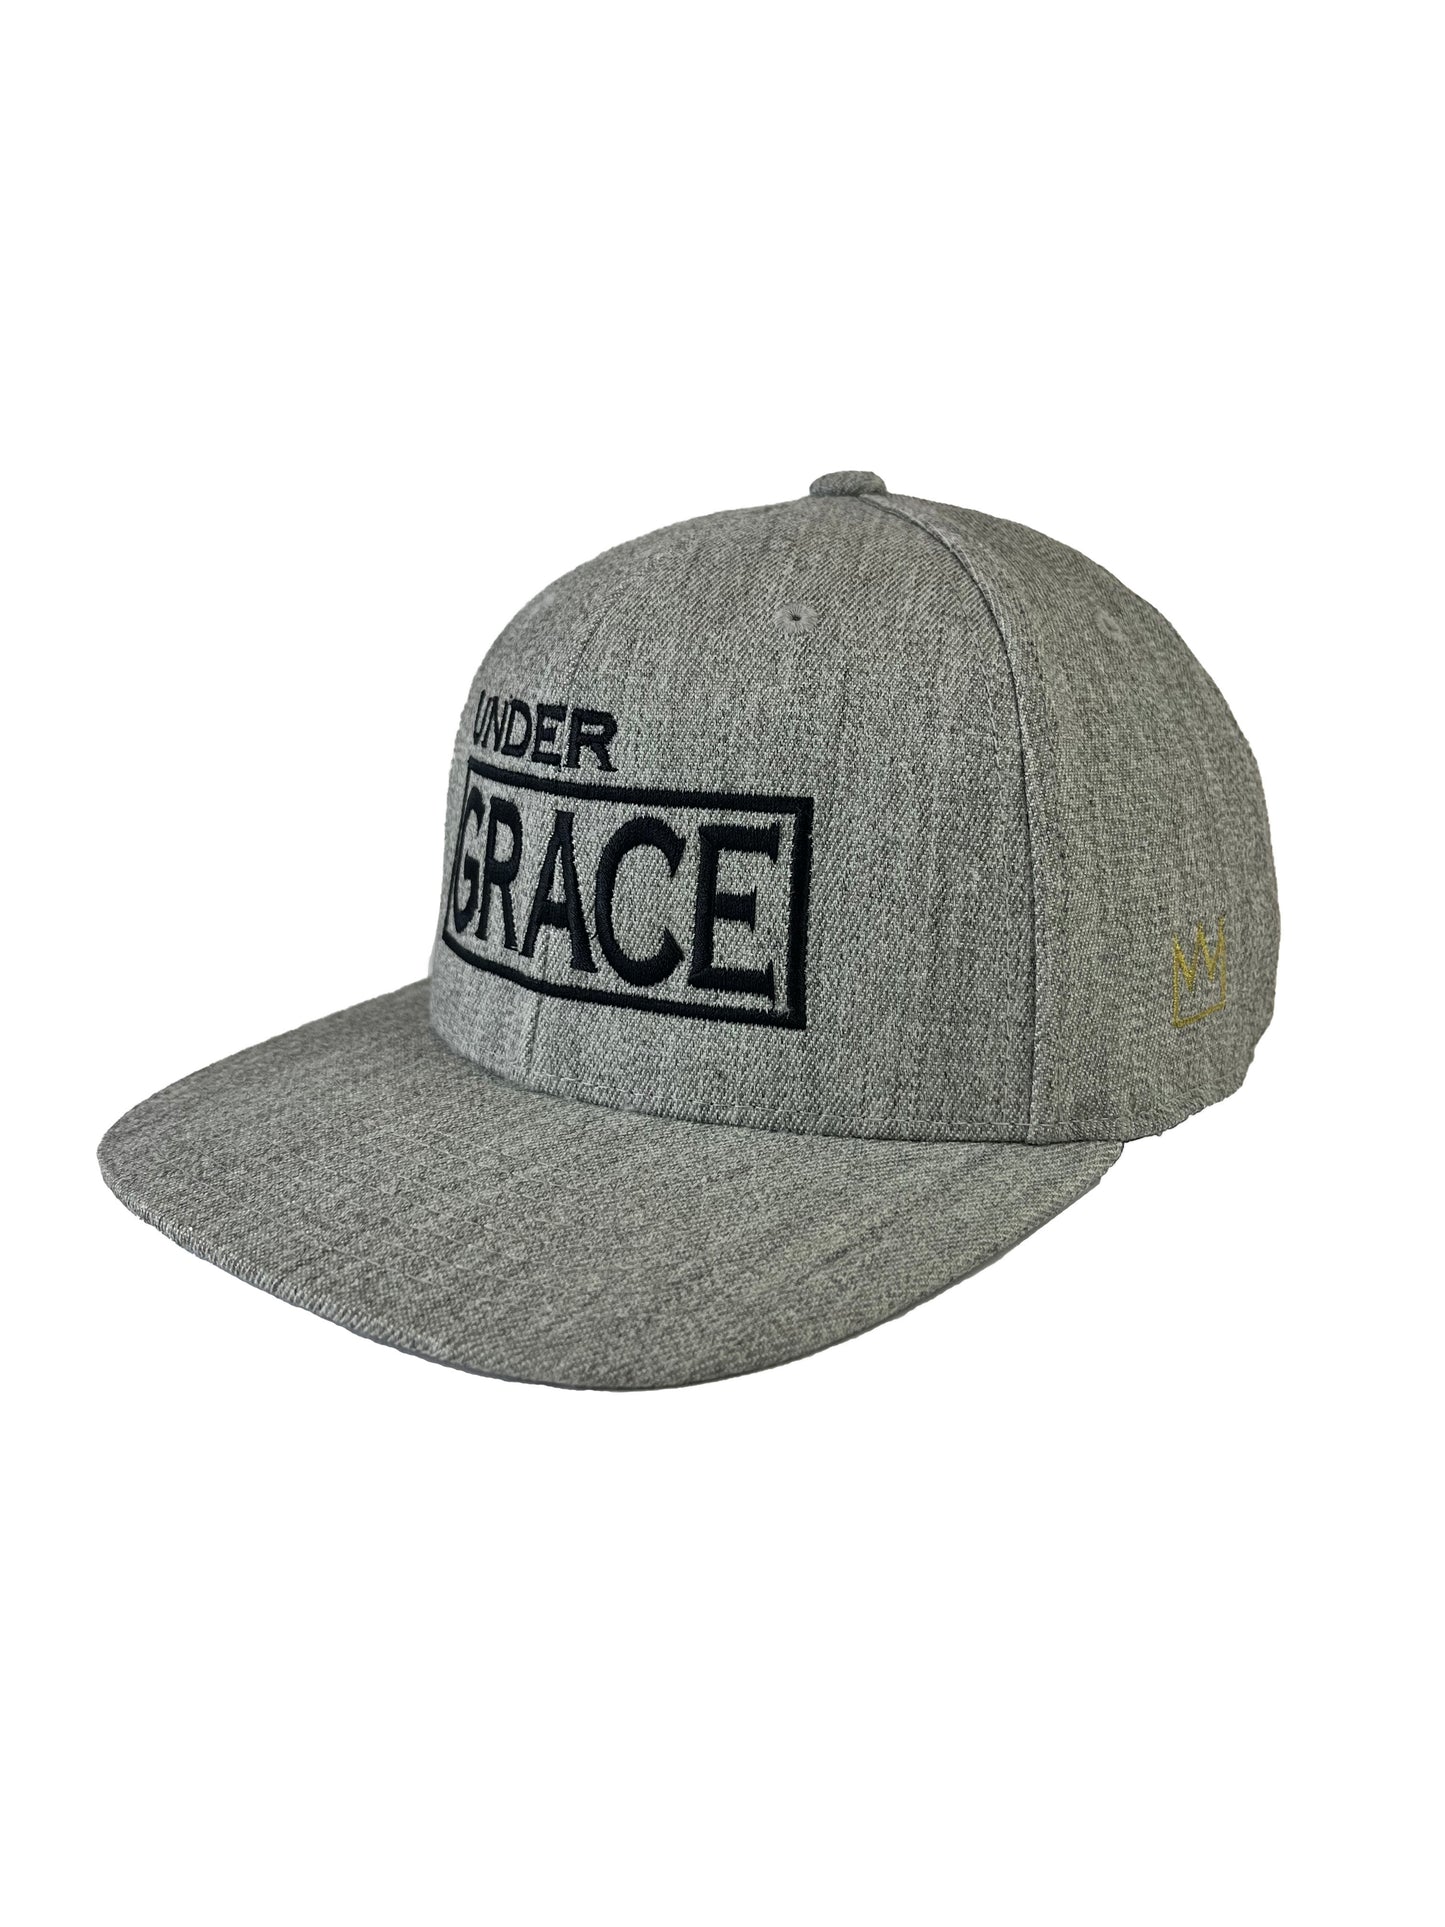 Under Grace Light grey hat